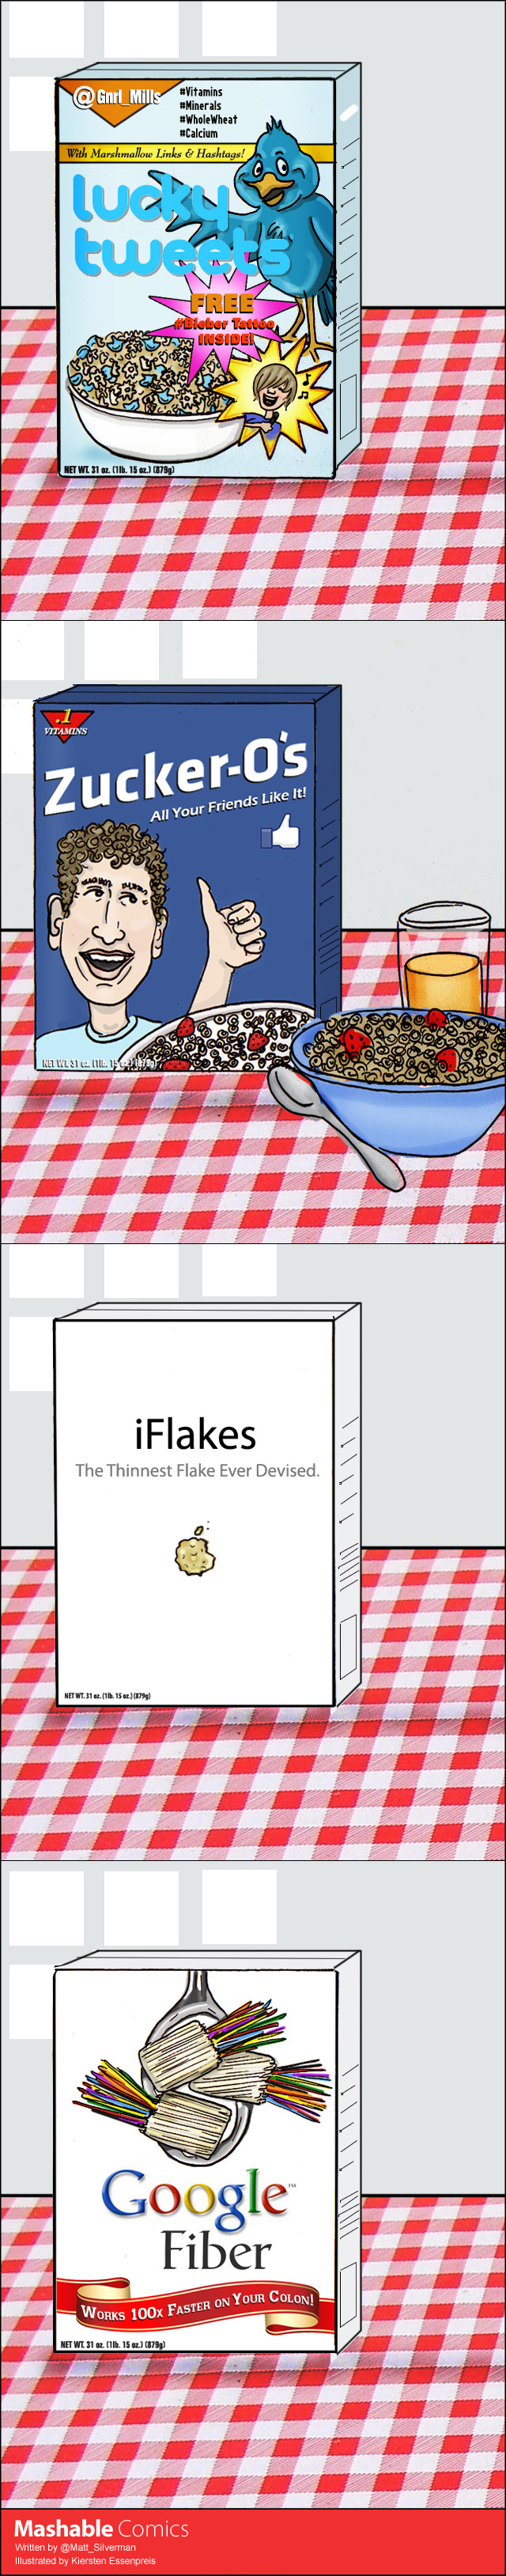 tech cereal mashable comic 640 1